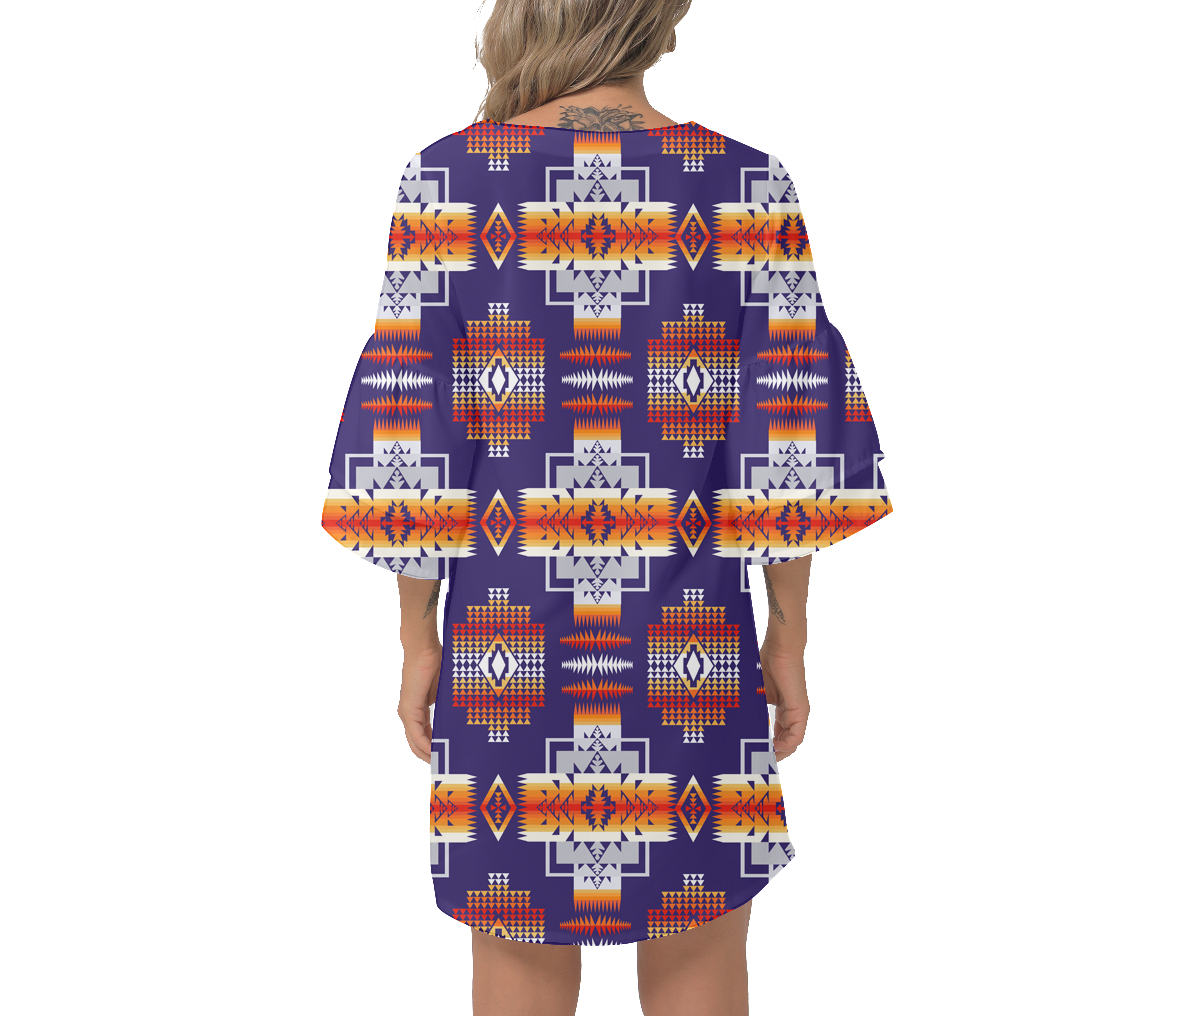 Powwow Storegb nat0004 native design print womens v neck dresss